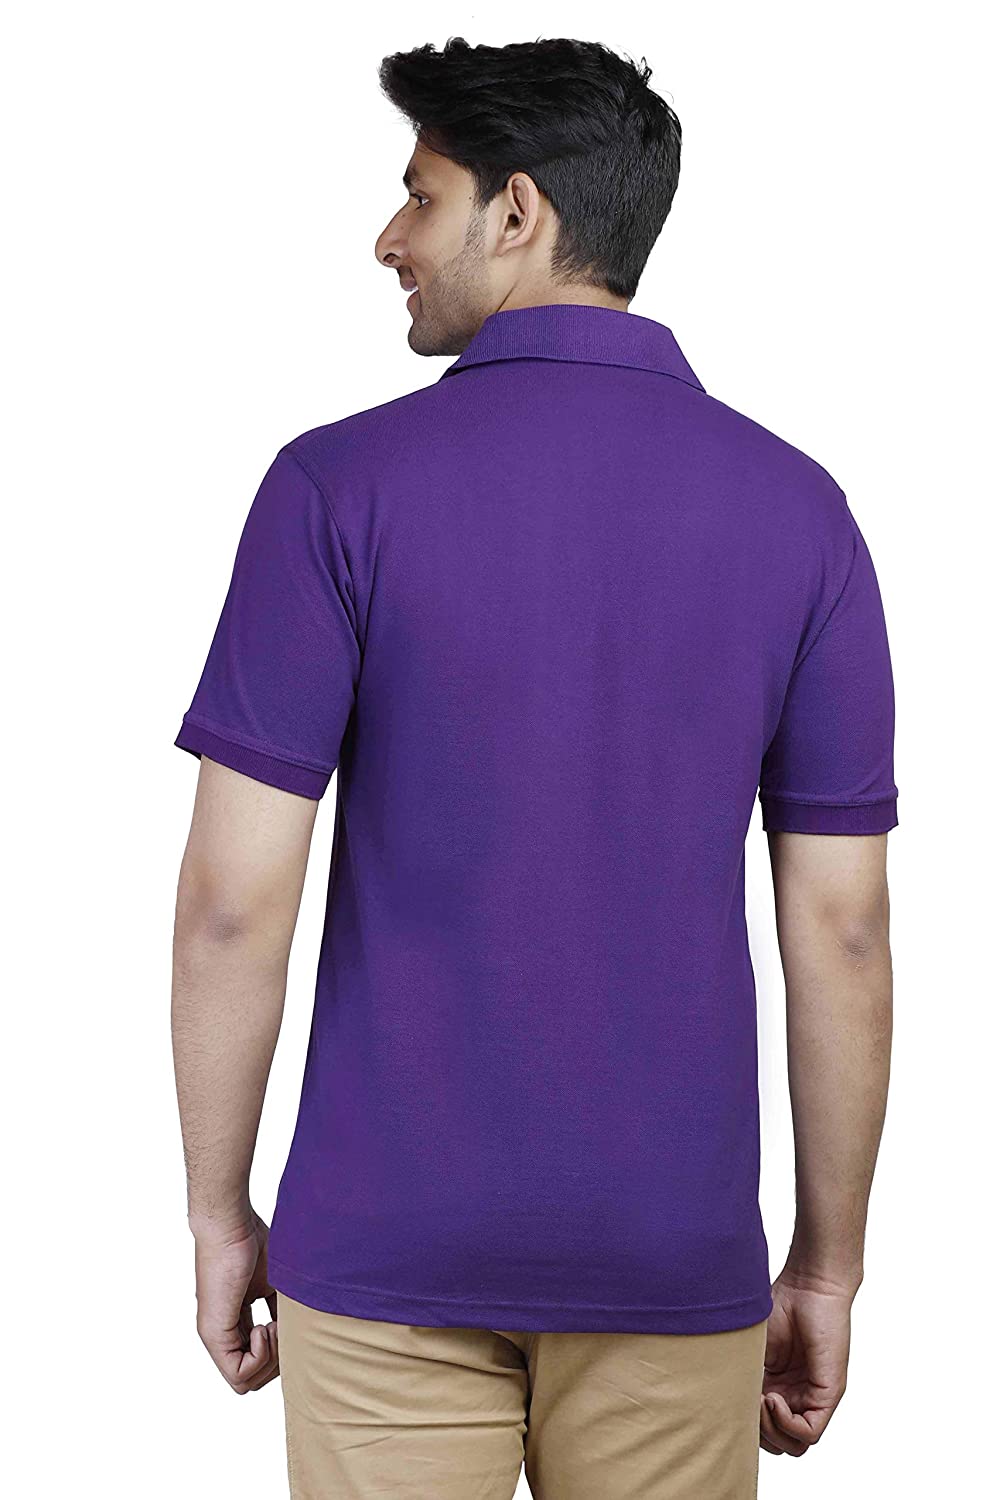 t shirt purple